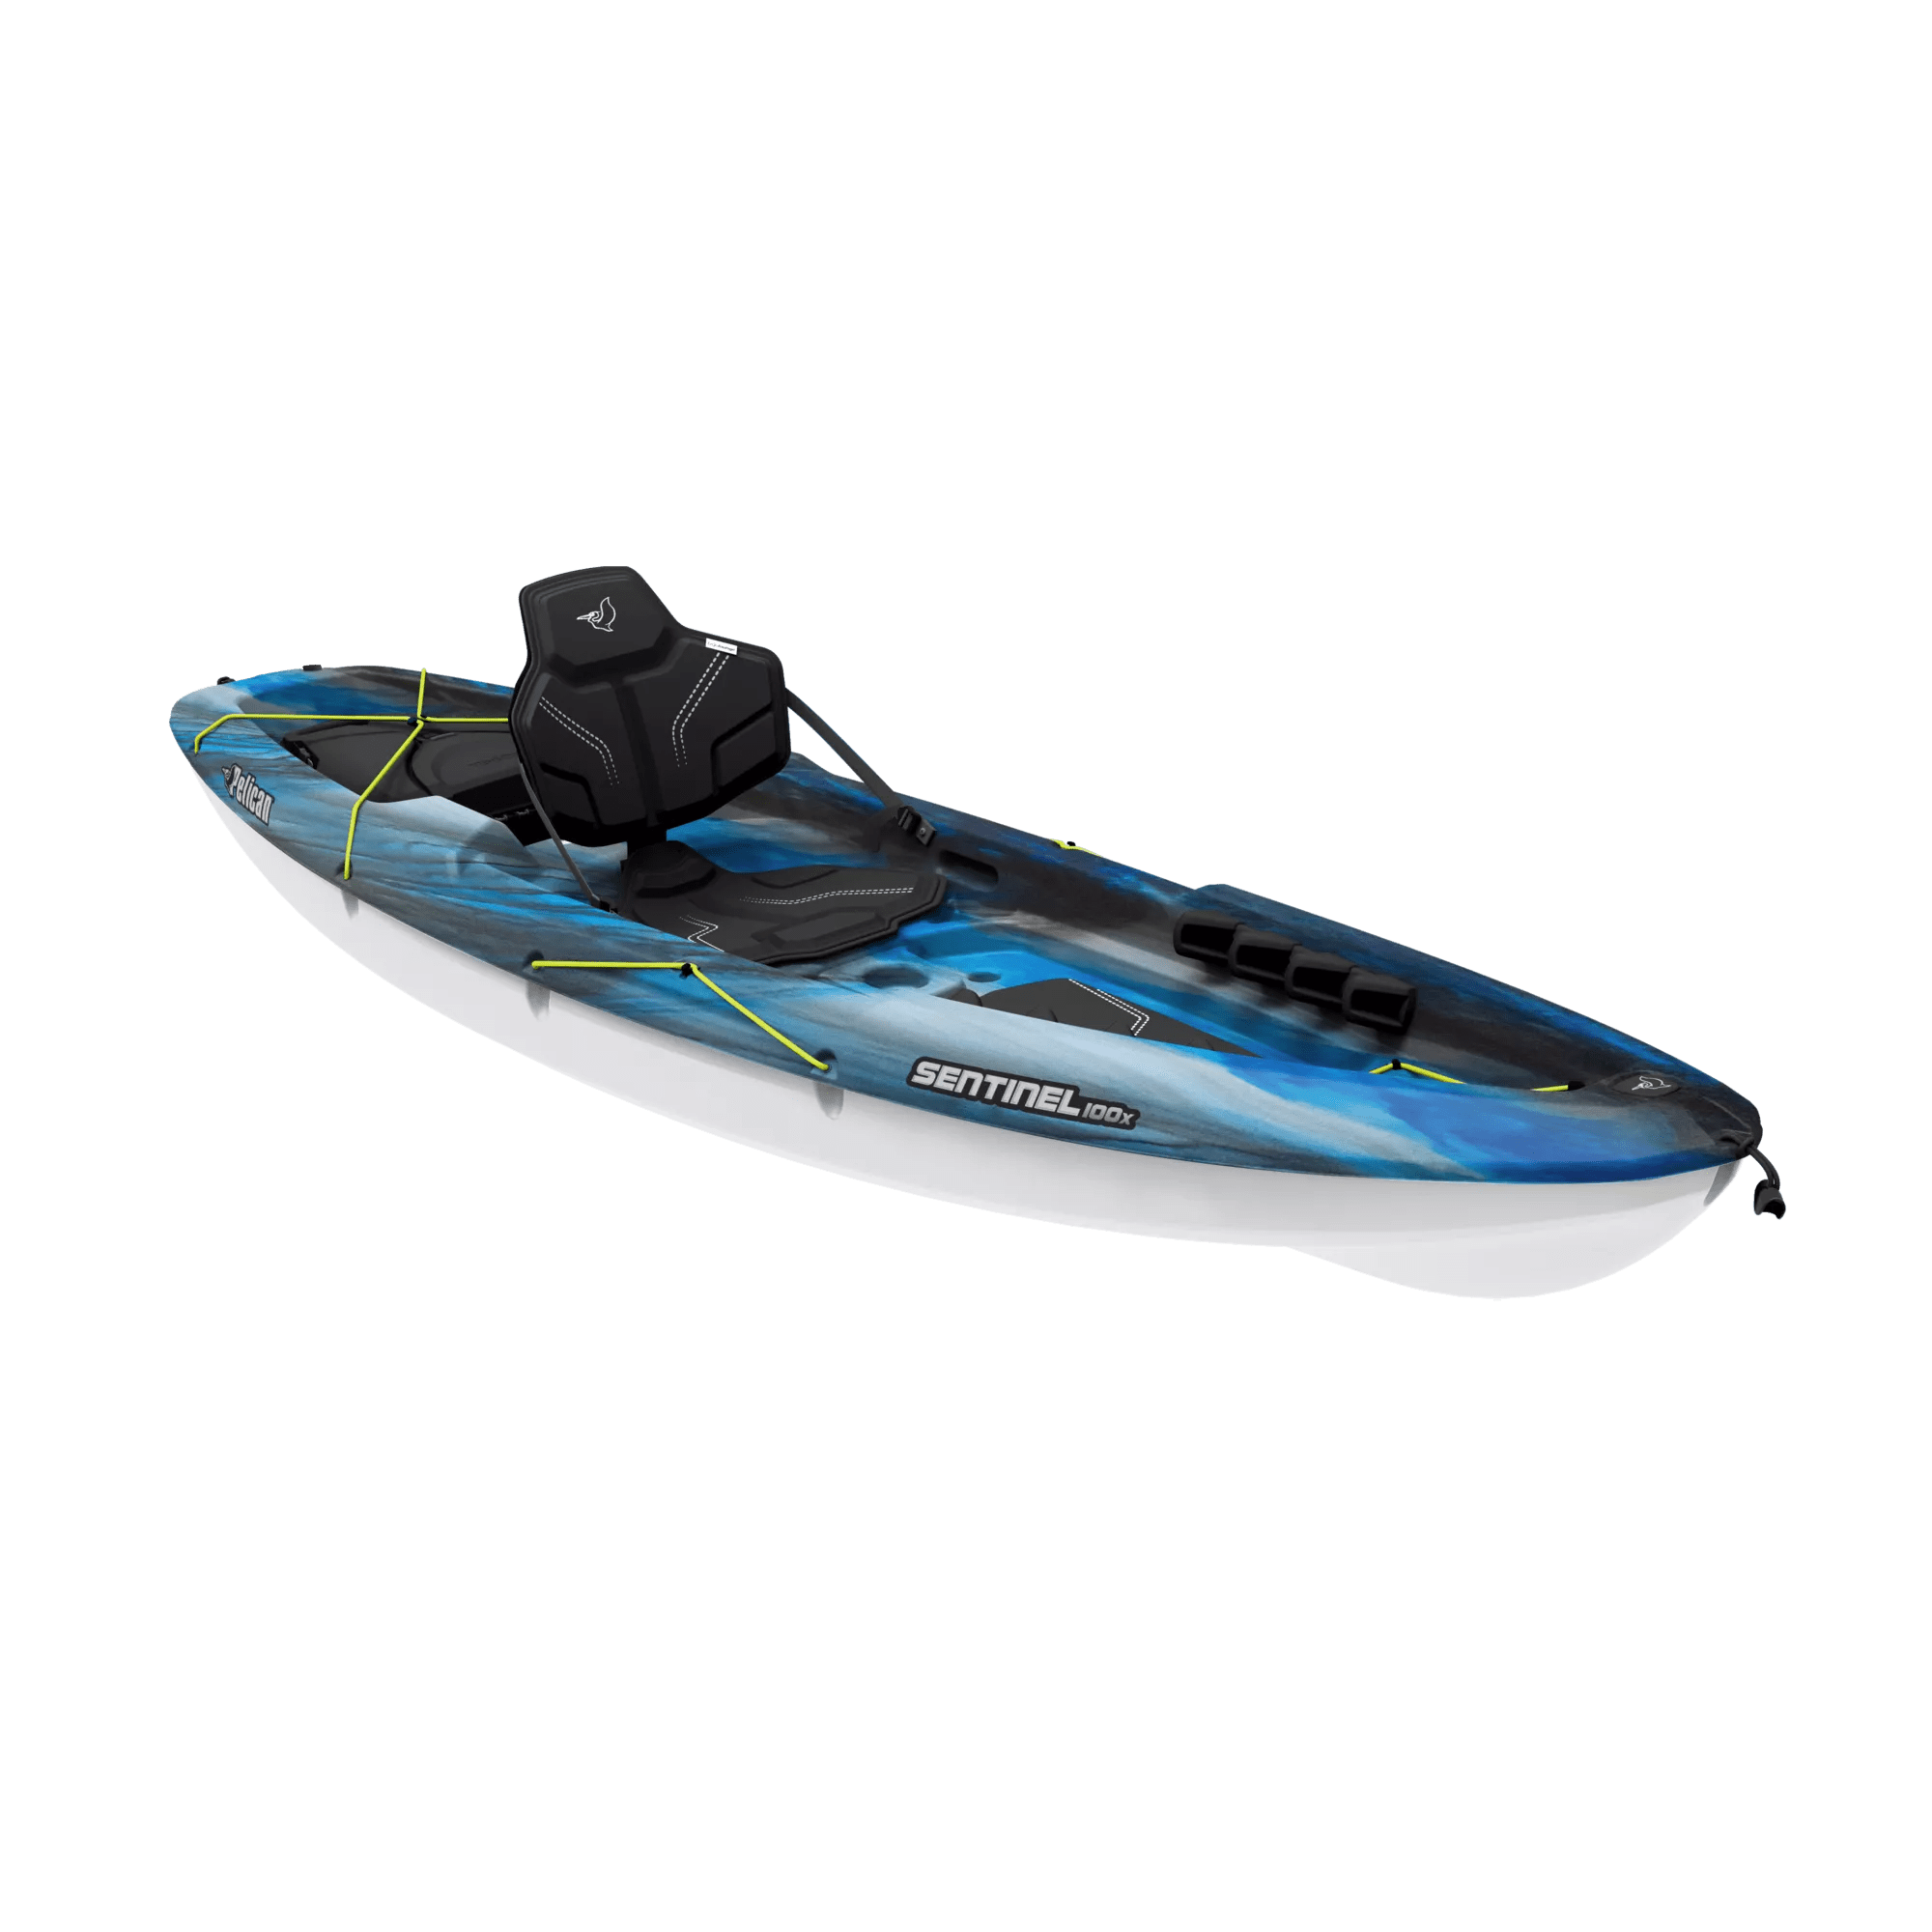 PELICAN - Sentinel 100X EXO Recreational Kayak - Blue - MEF10P100-00 - ISO 